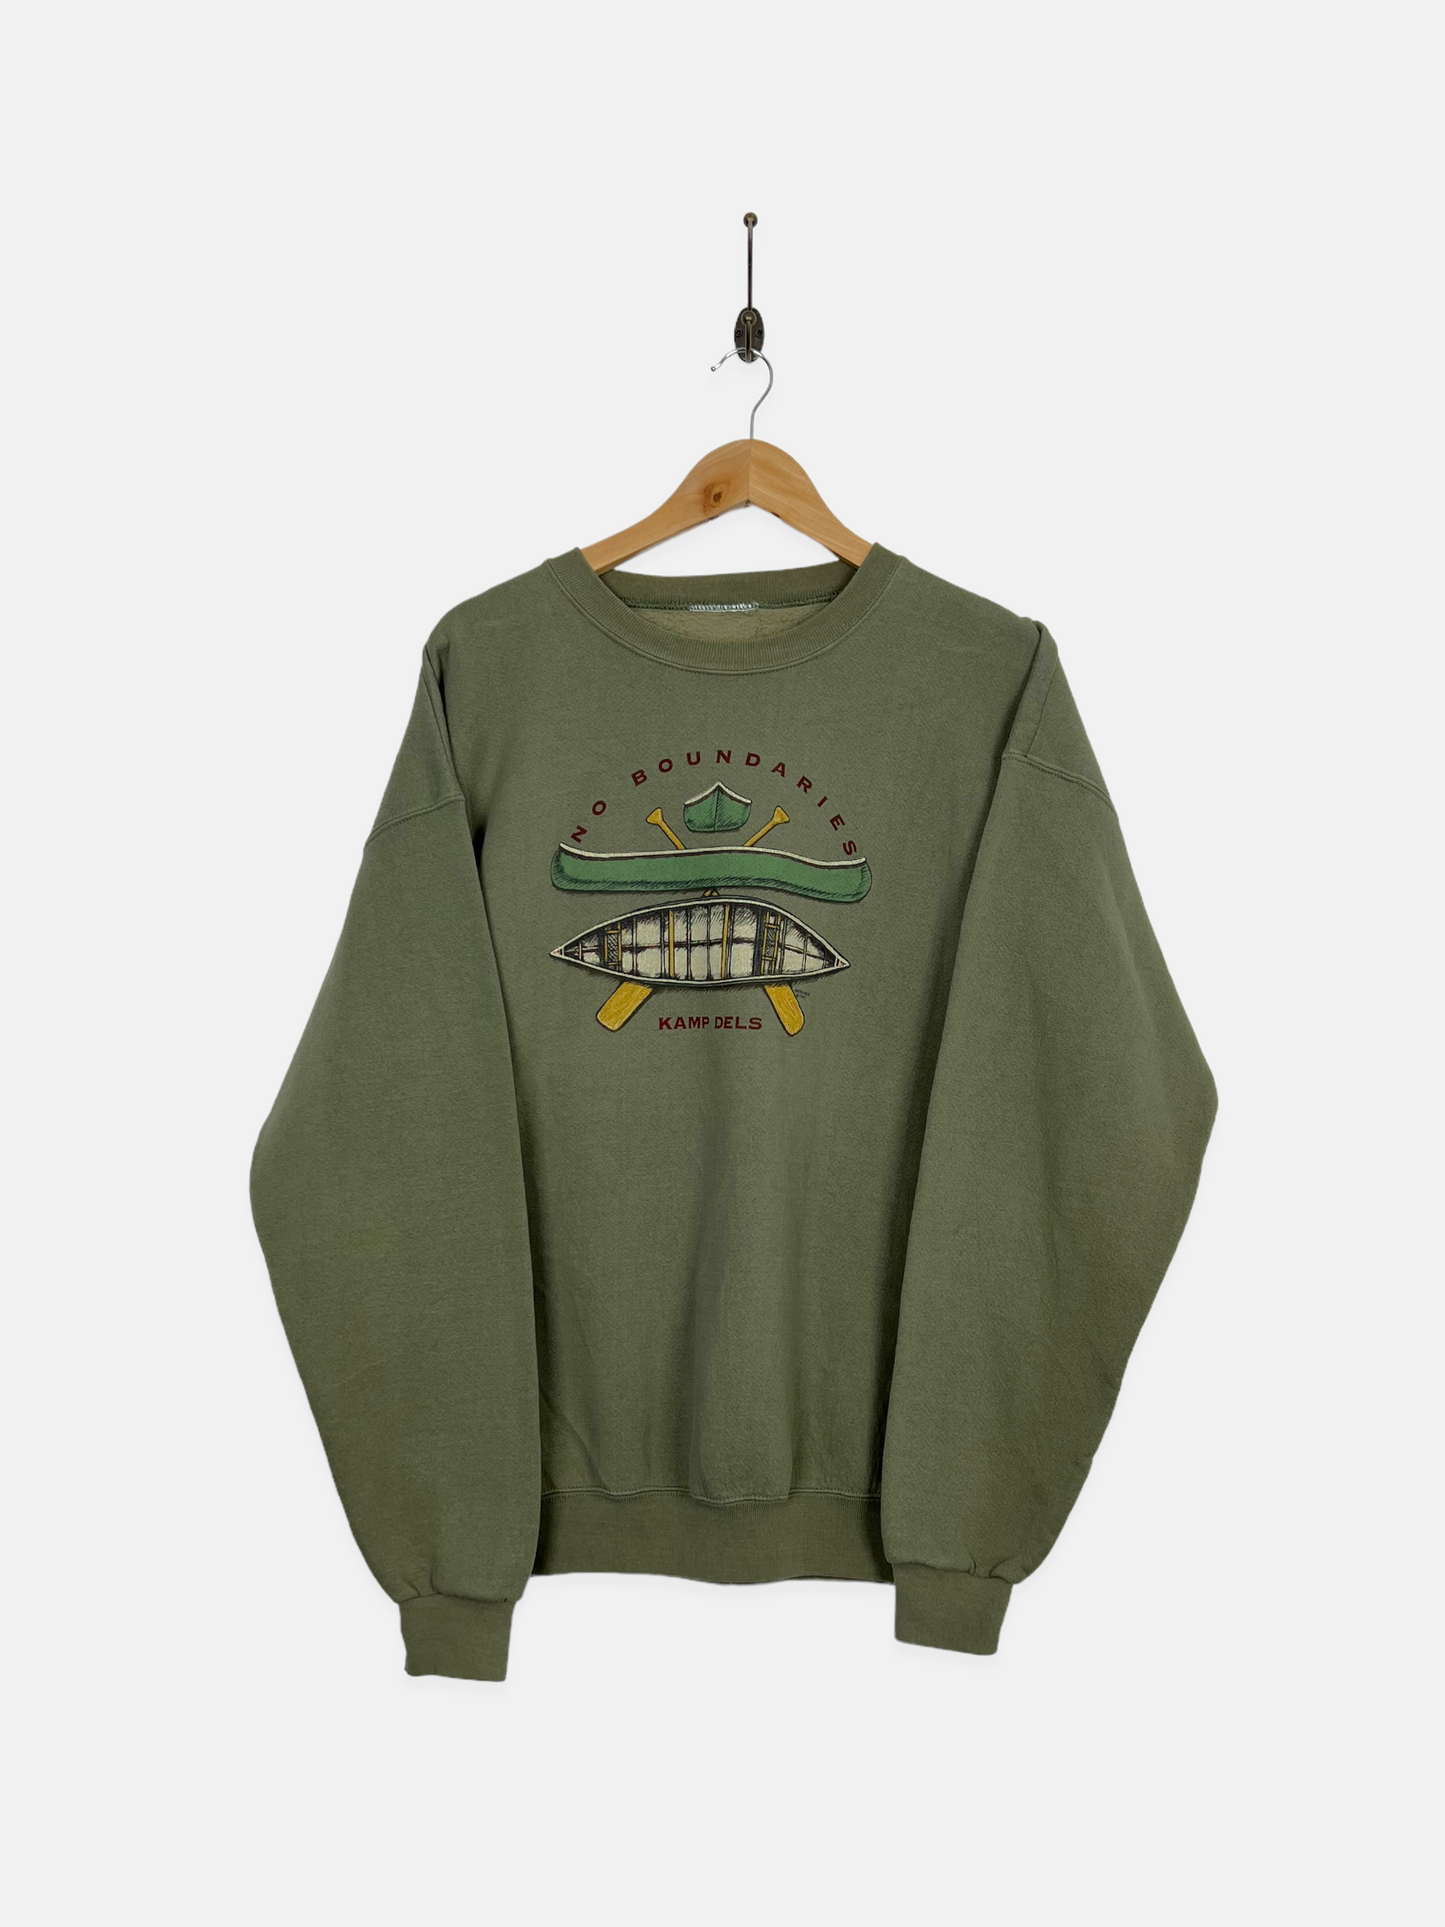 90's Kamp Dels No Boundaries Vintage Sweatshirt Size L